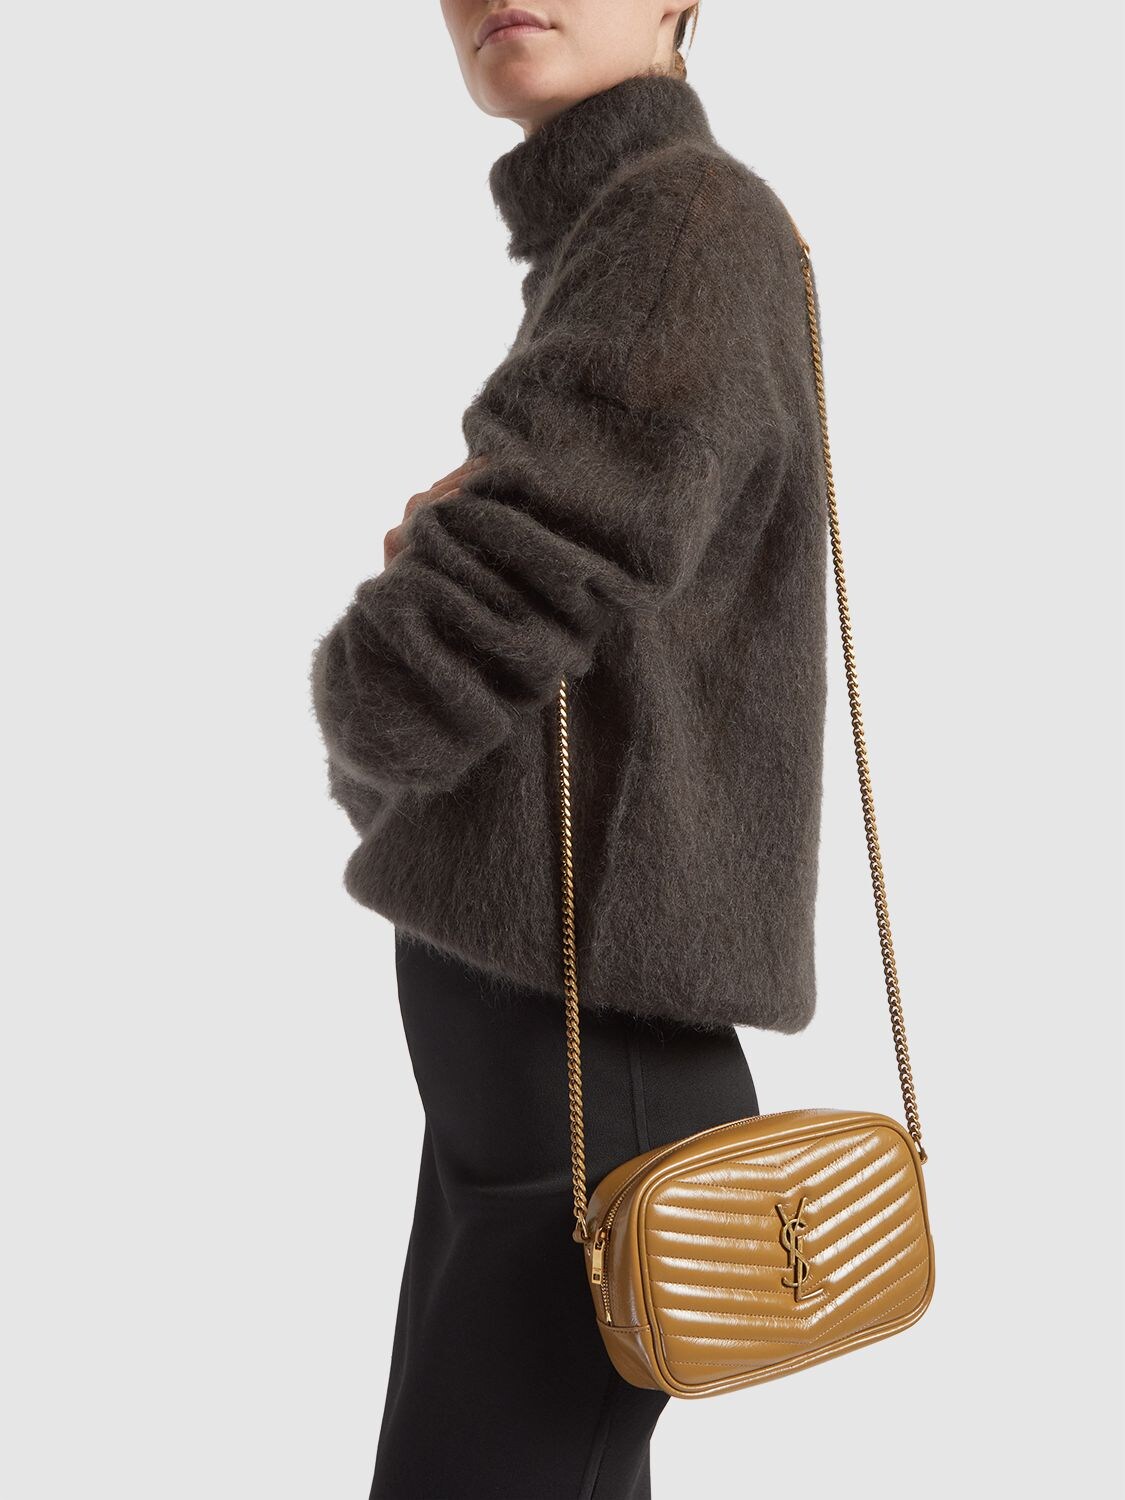 Néonoé handbag Louis Vuitton Beige in Wicker - 32140221